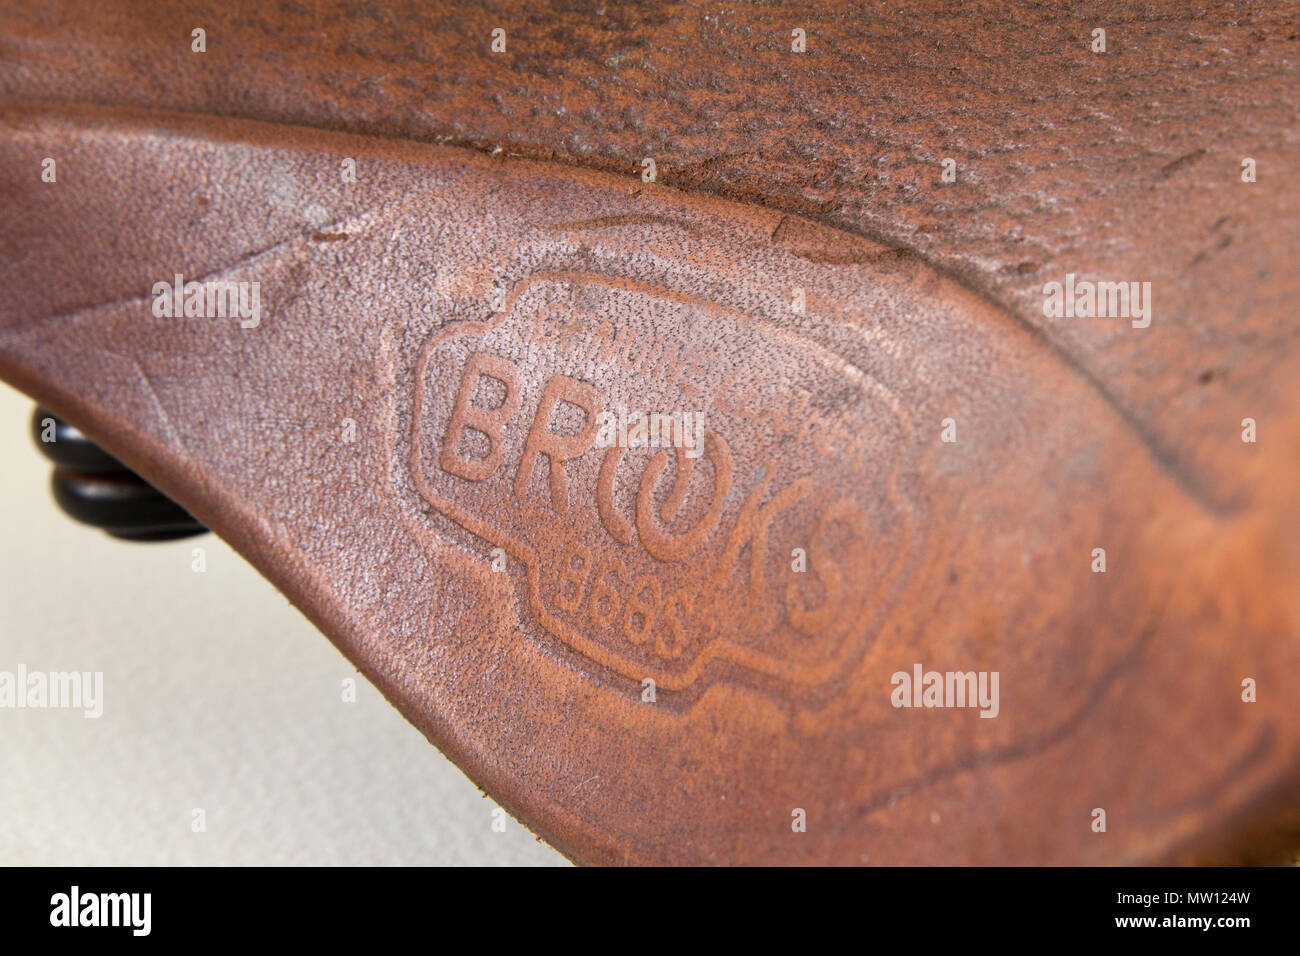 Detail of the vintage Brooks England bicycle saddle Stock Photo